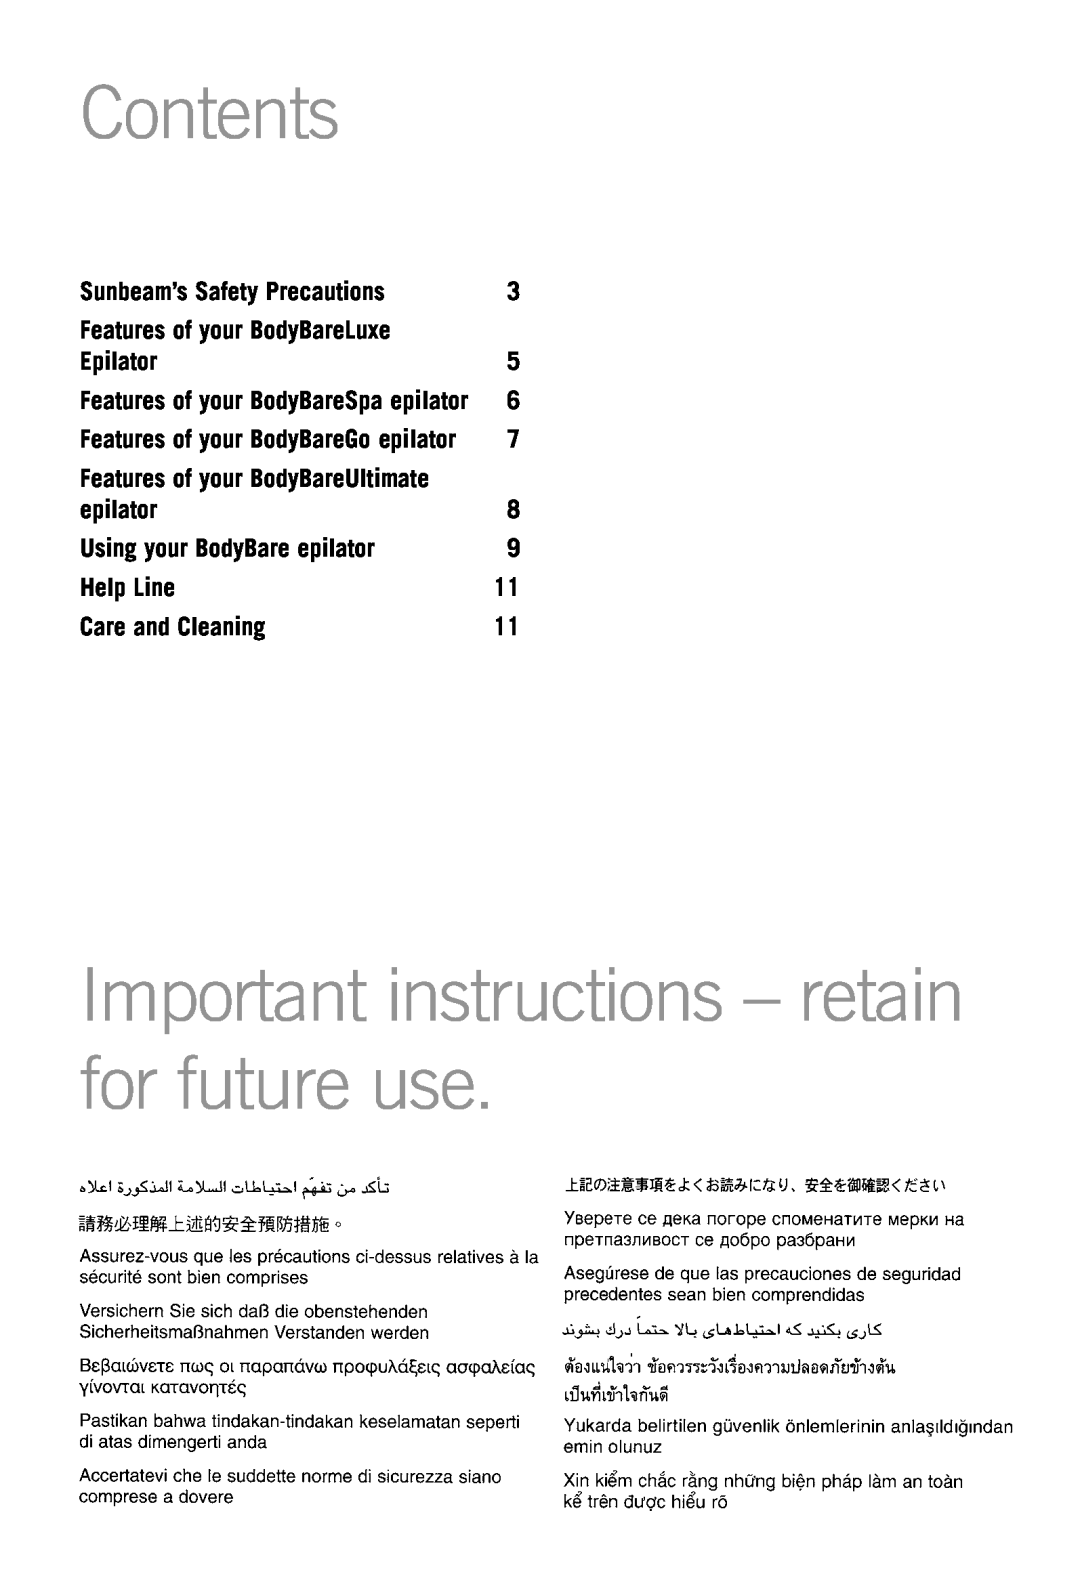 Emjoi AP9GAR Contents, Important instructions - retain for future use, Sunbeam’s Safety Precautions, Epilator, epilator 